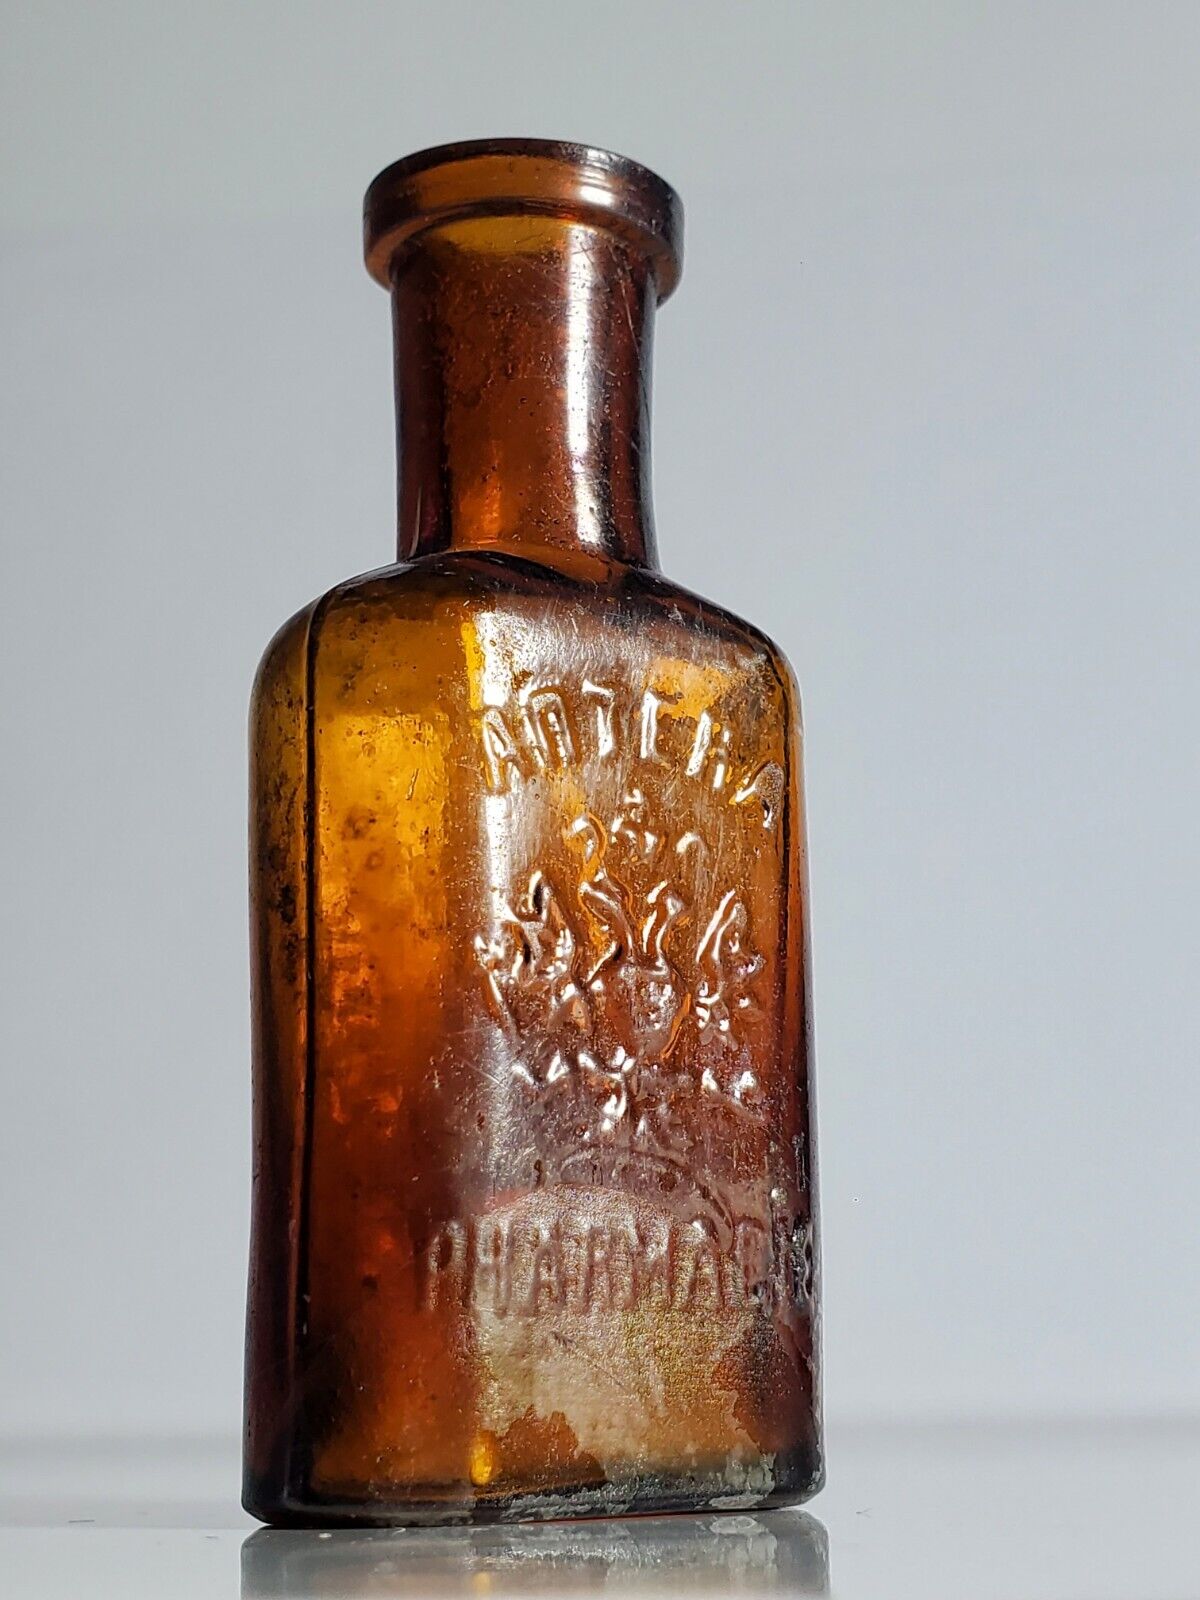  Antique 1870-90s pharmacy bottle from the Czars era \